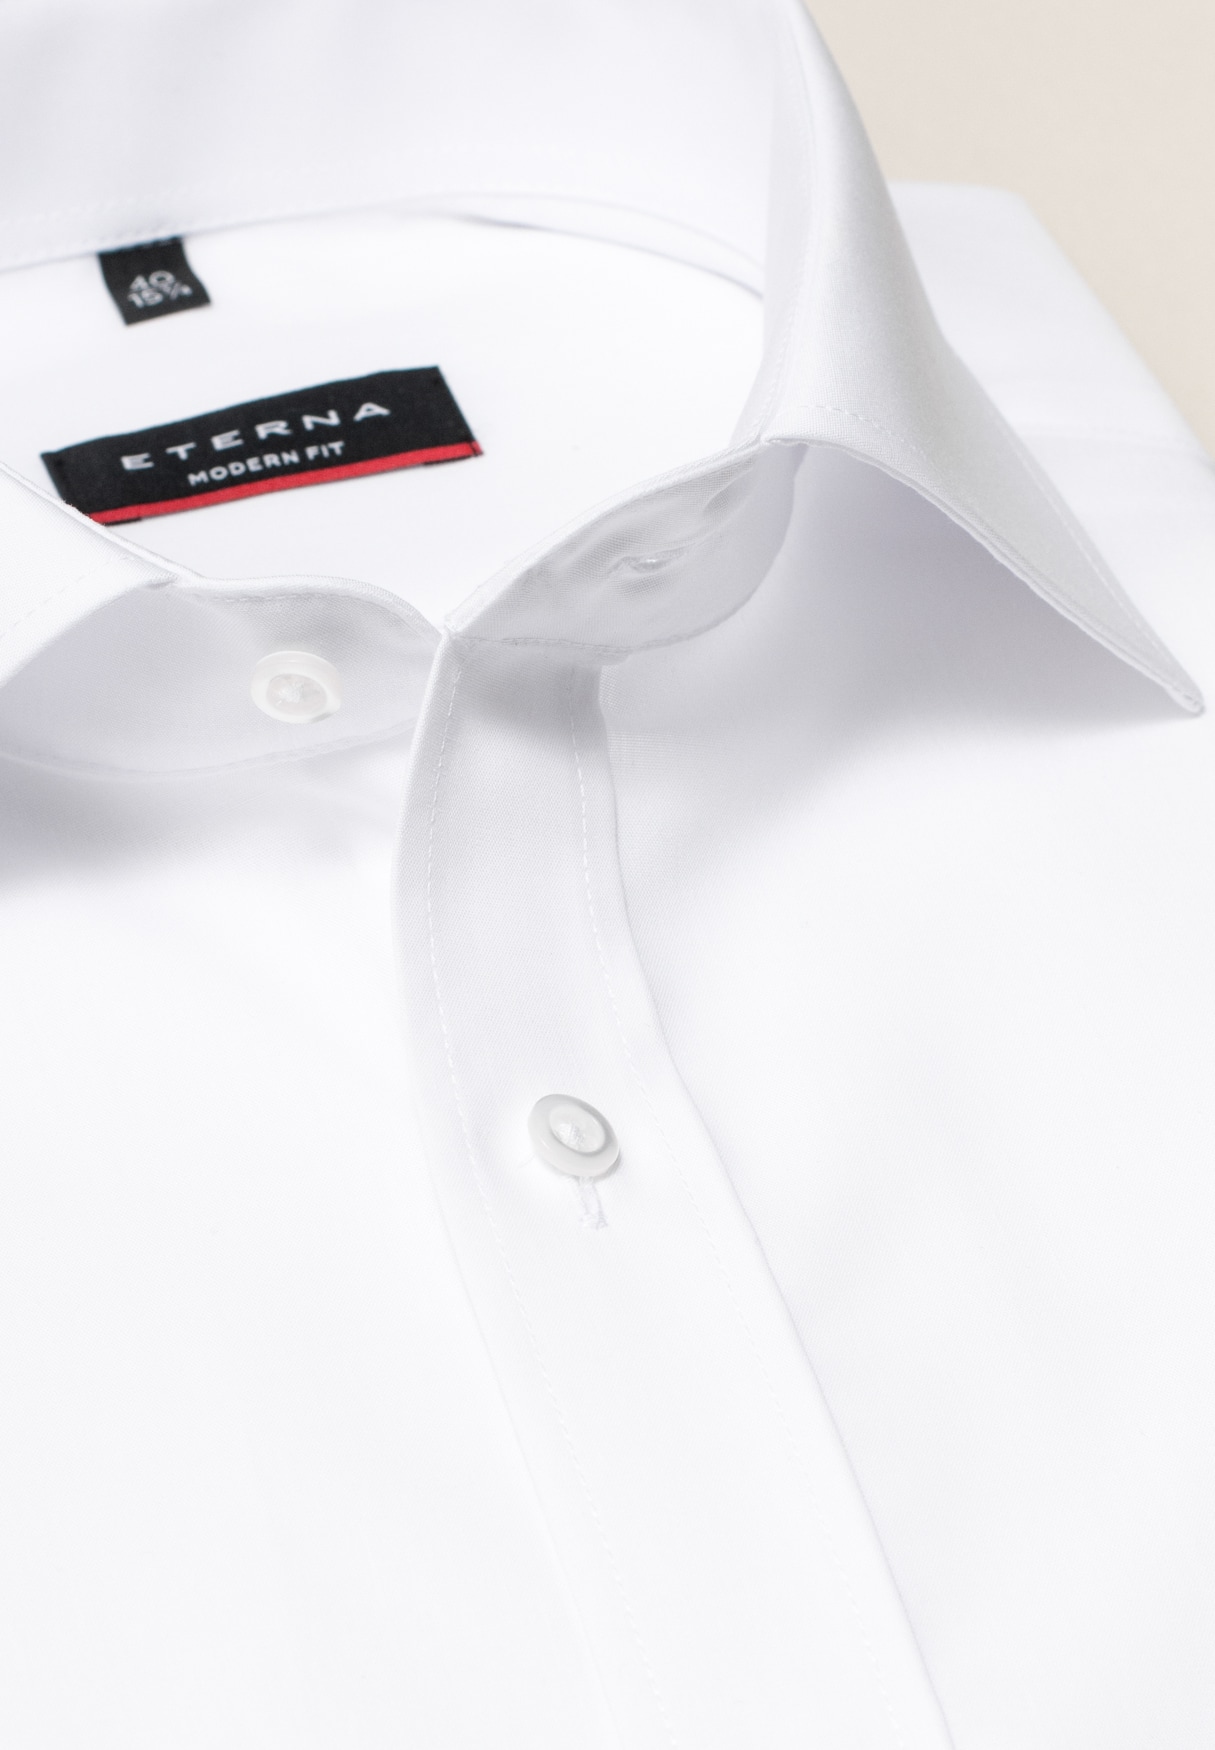 MODERN FIT Shirt weiß | 1SH00113-00-01-41-1/1 | Langarm unifarben Original | weiß | in 41